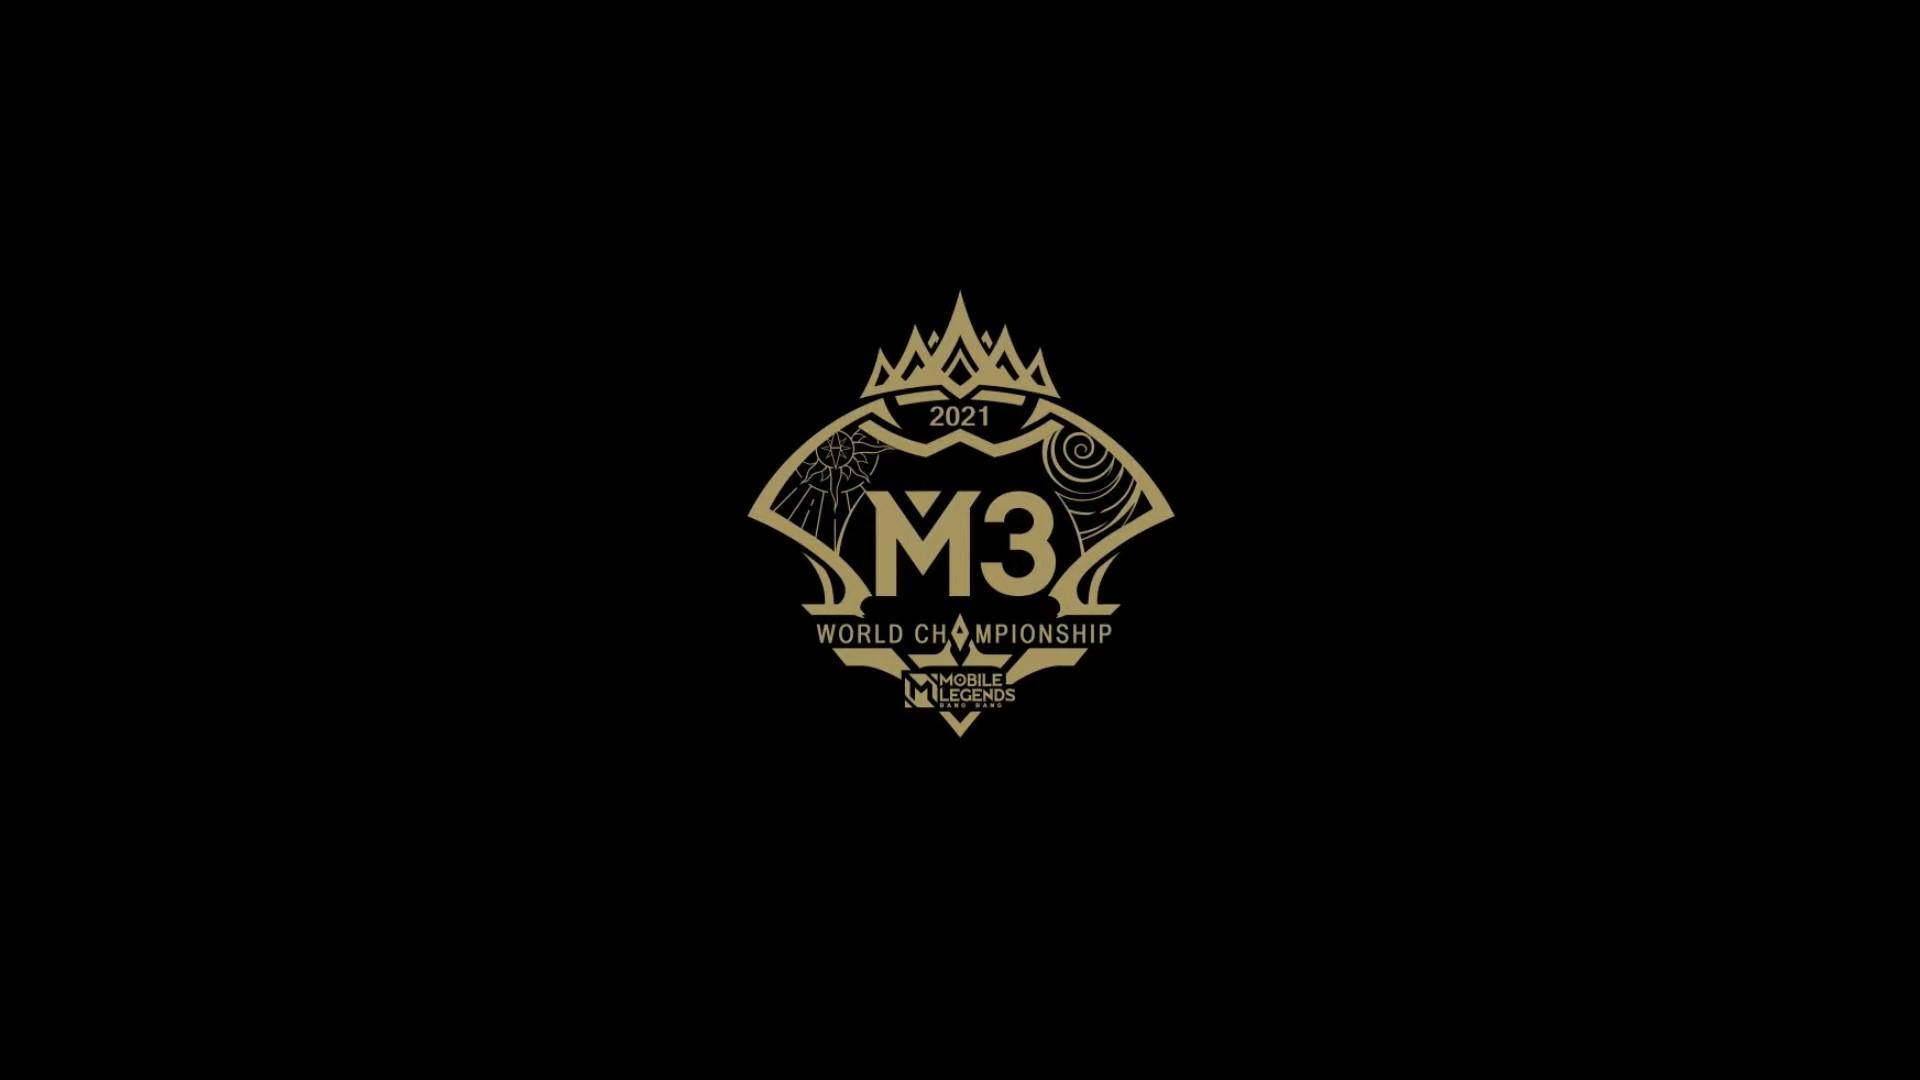 Download Special M3 Mobile Legends Logo Wallpaper 